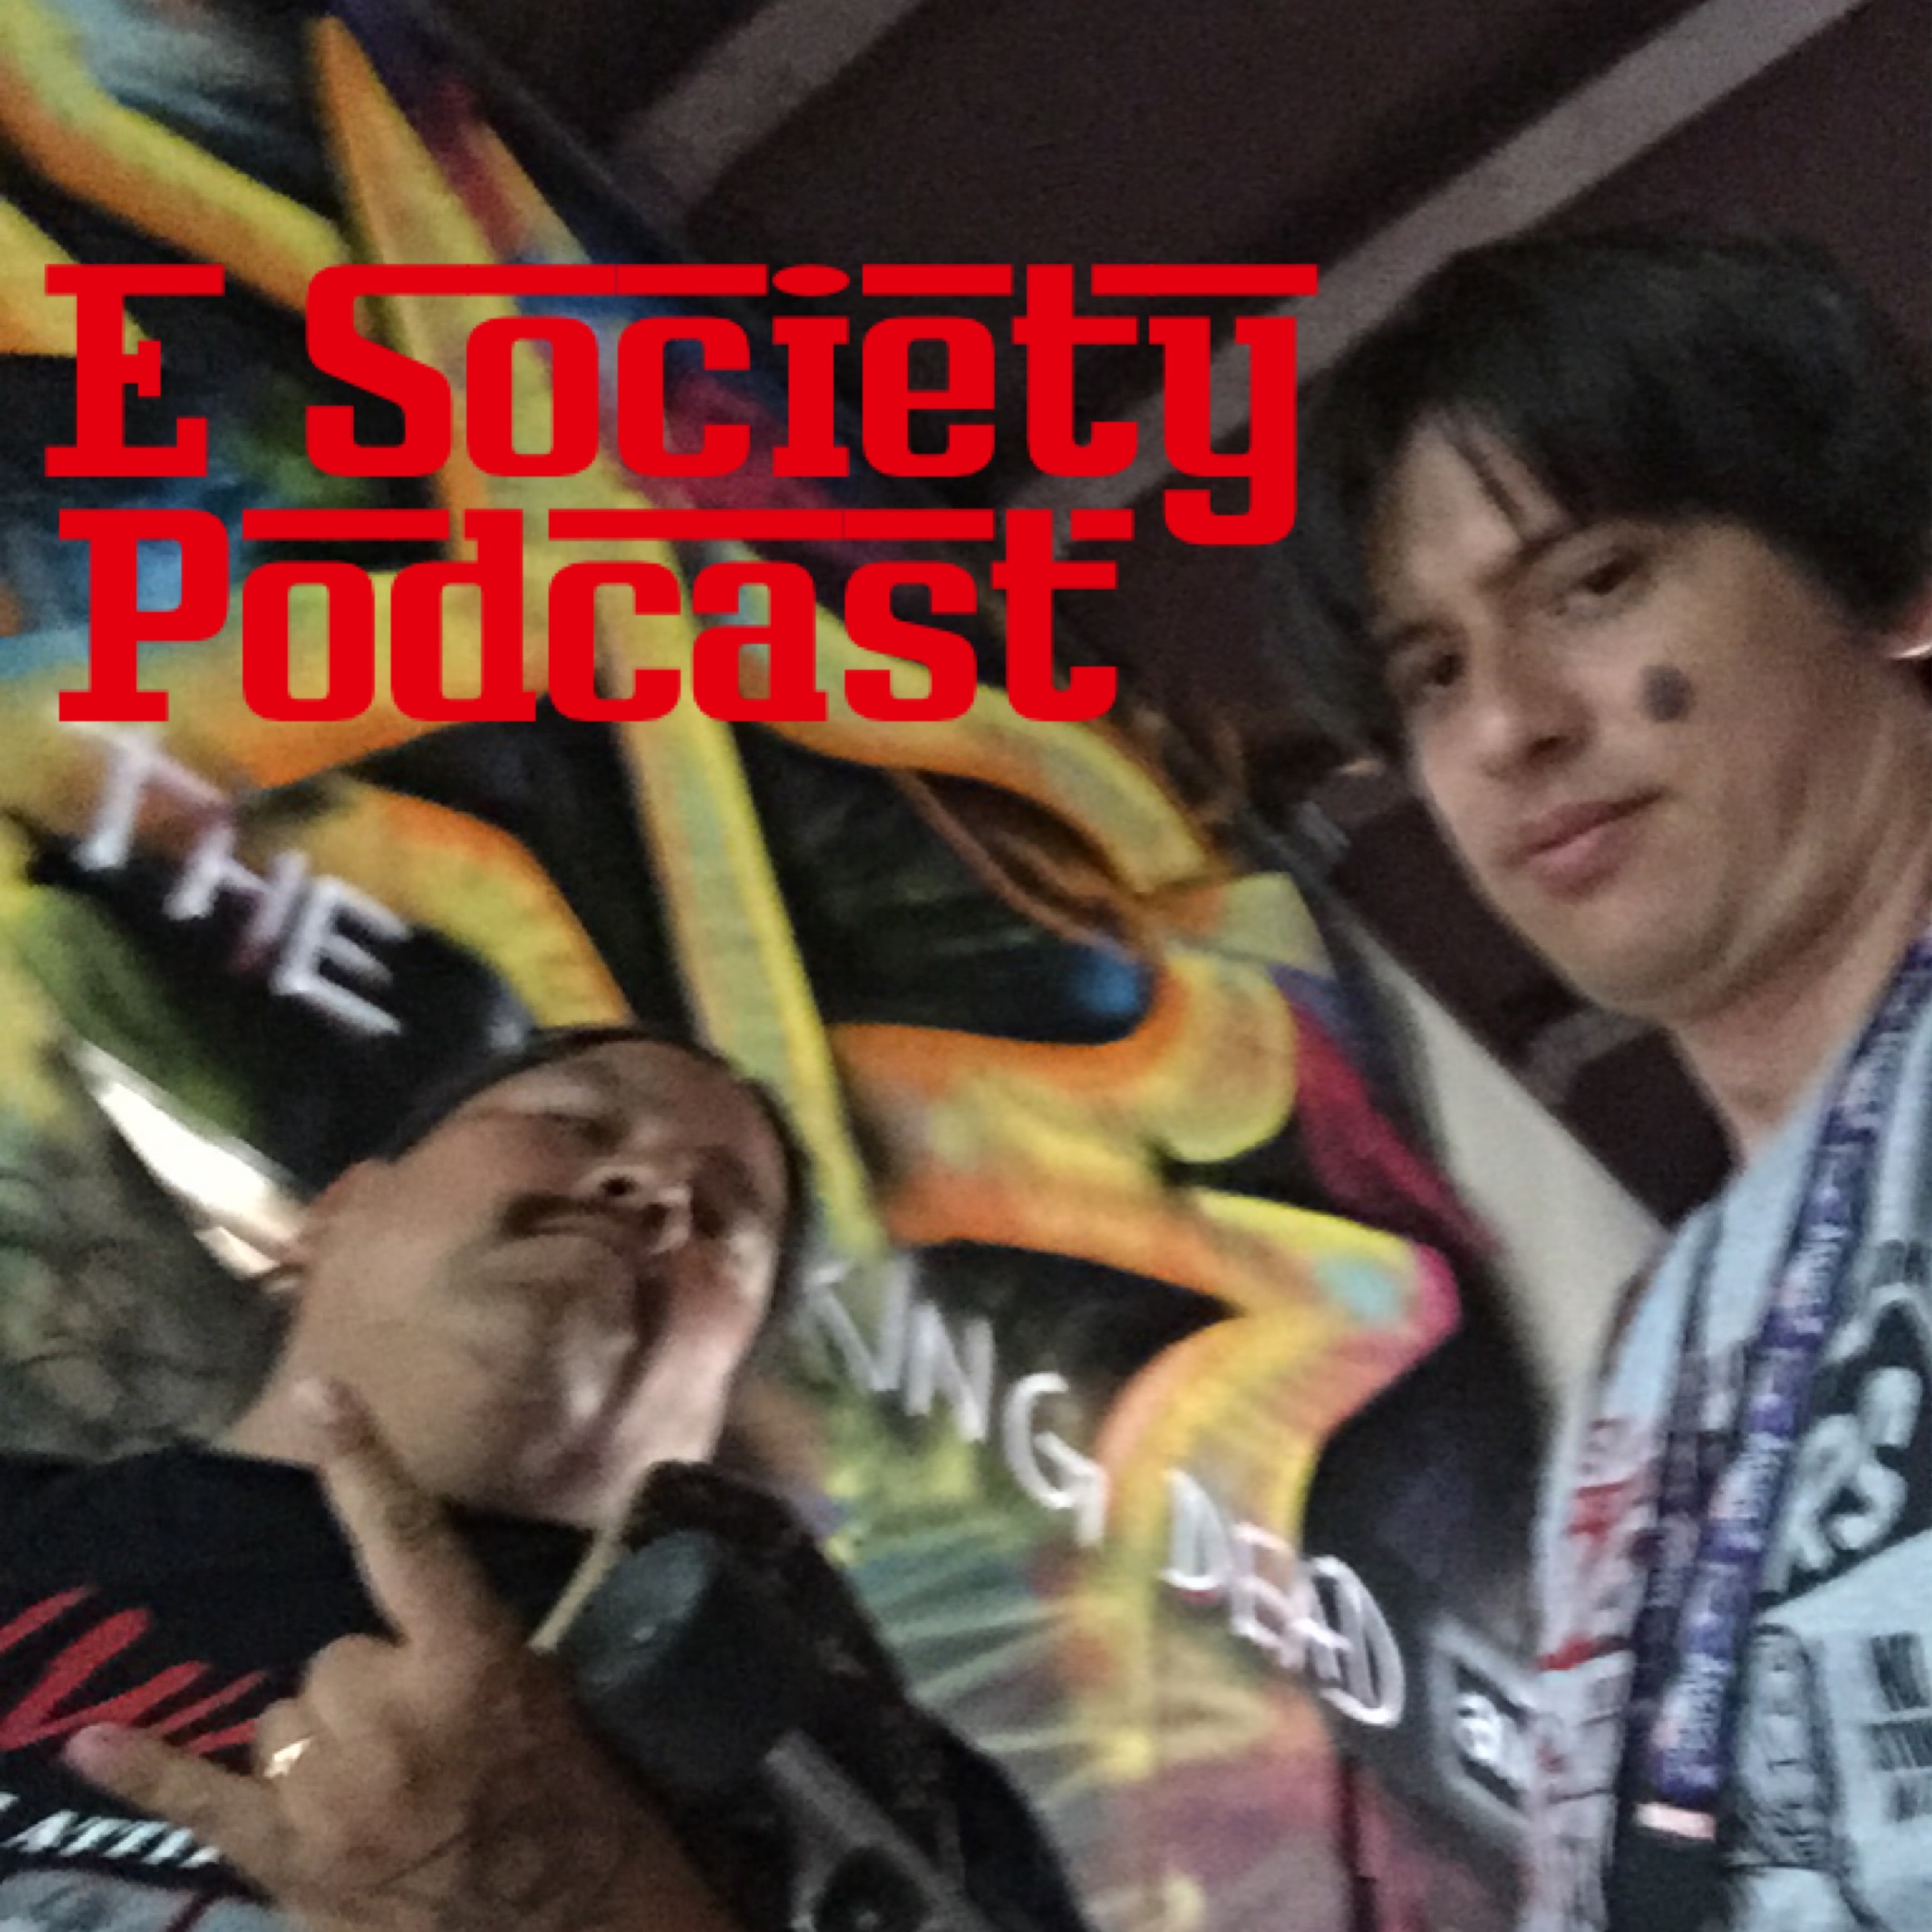 E Society Podcast - Ep. 86: Make up show.